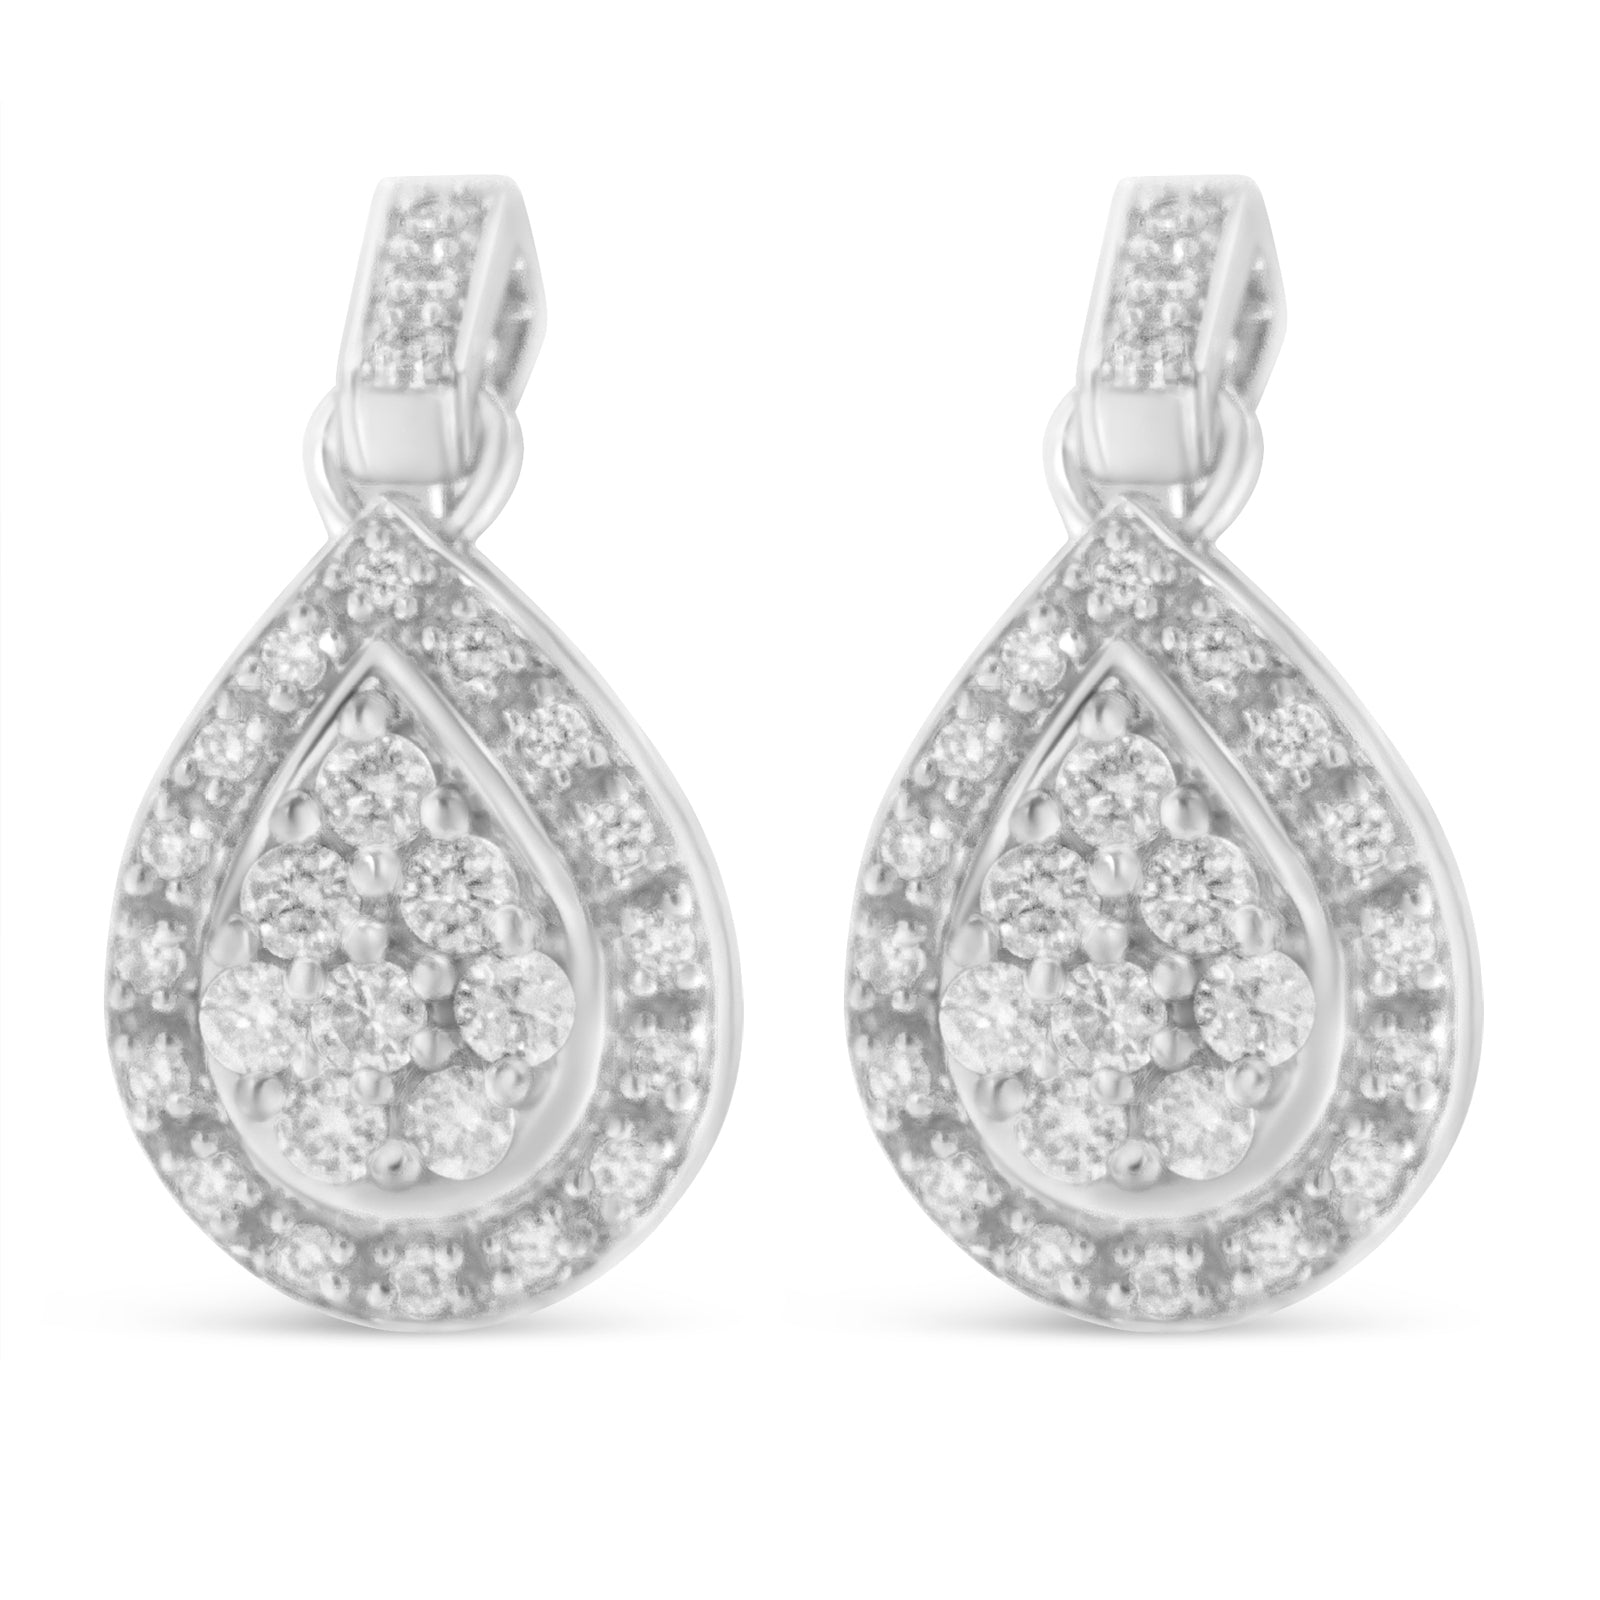 10k White Gold Round Cut Diamond Earrings 0.75 cttw